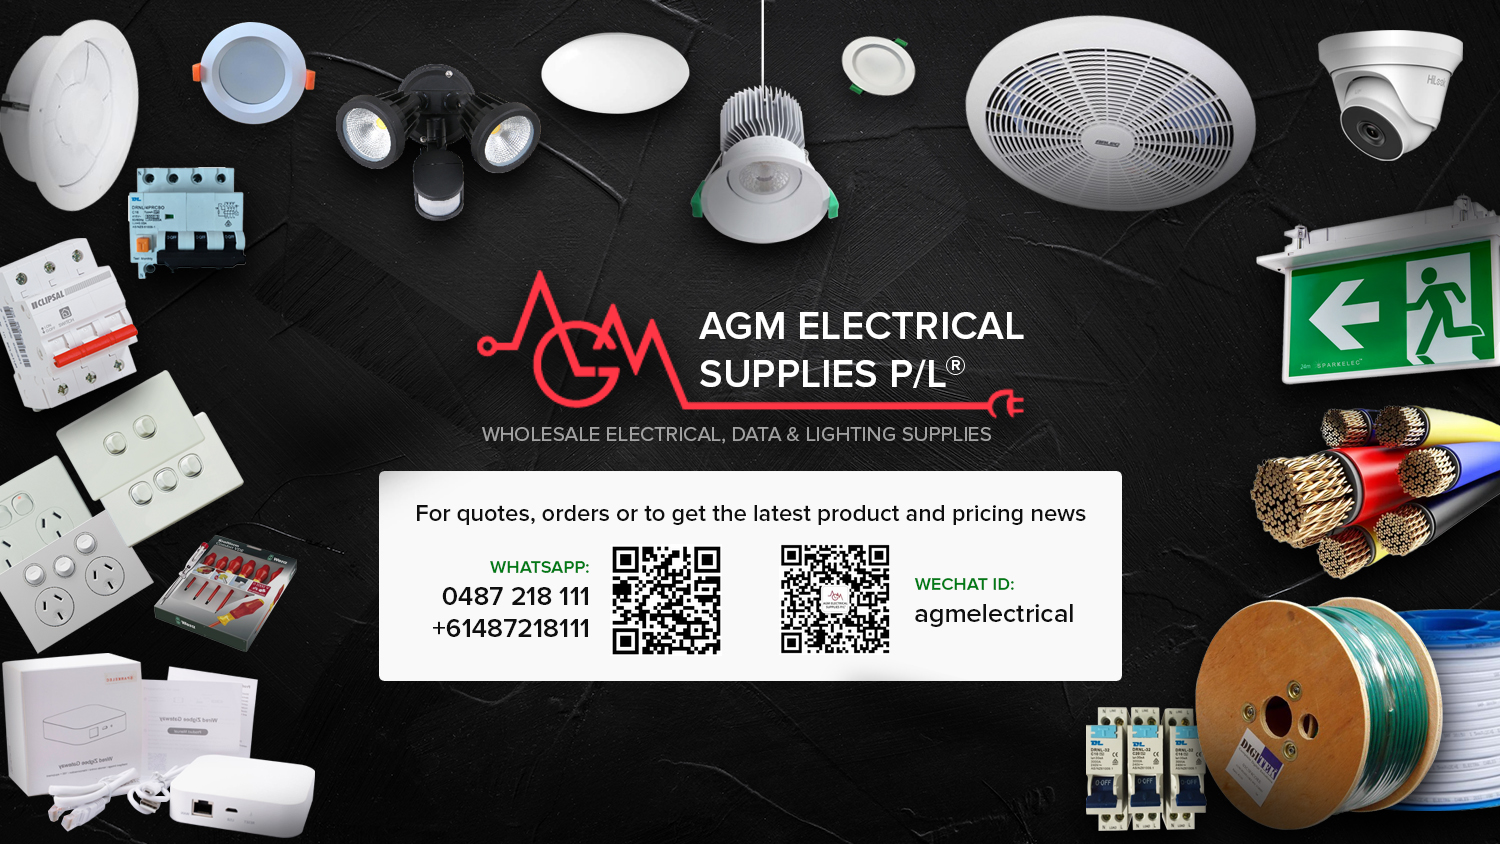 AGM electrical supplies